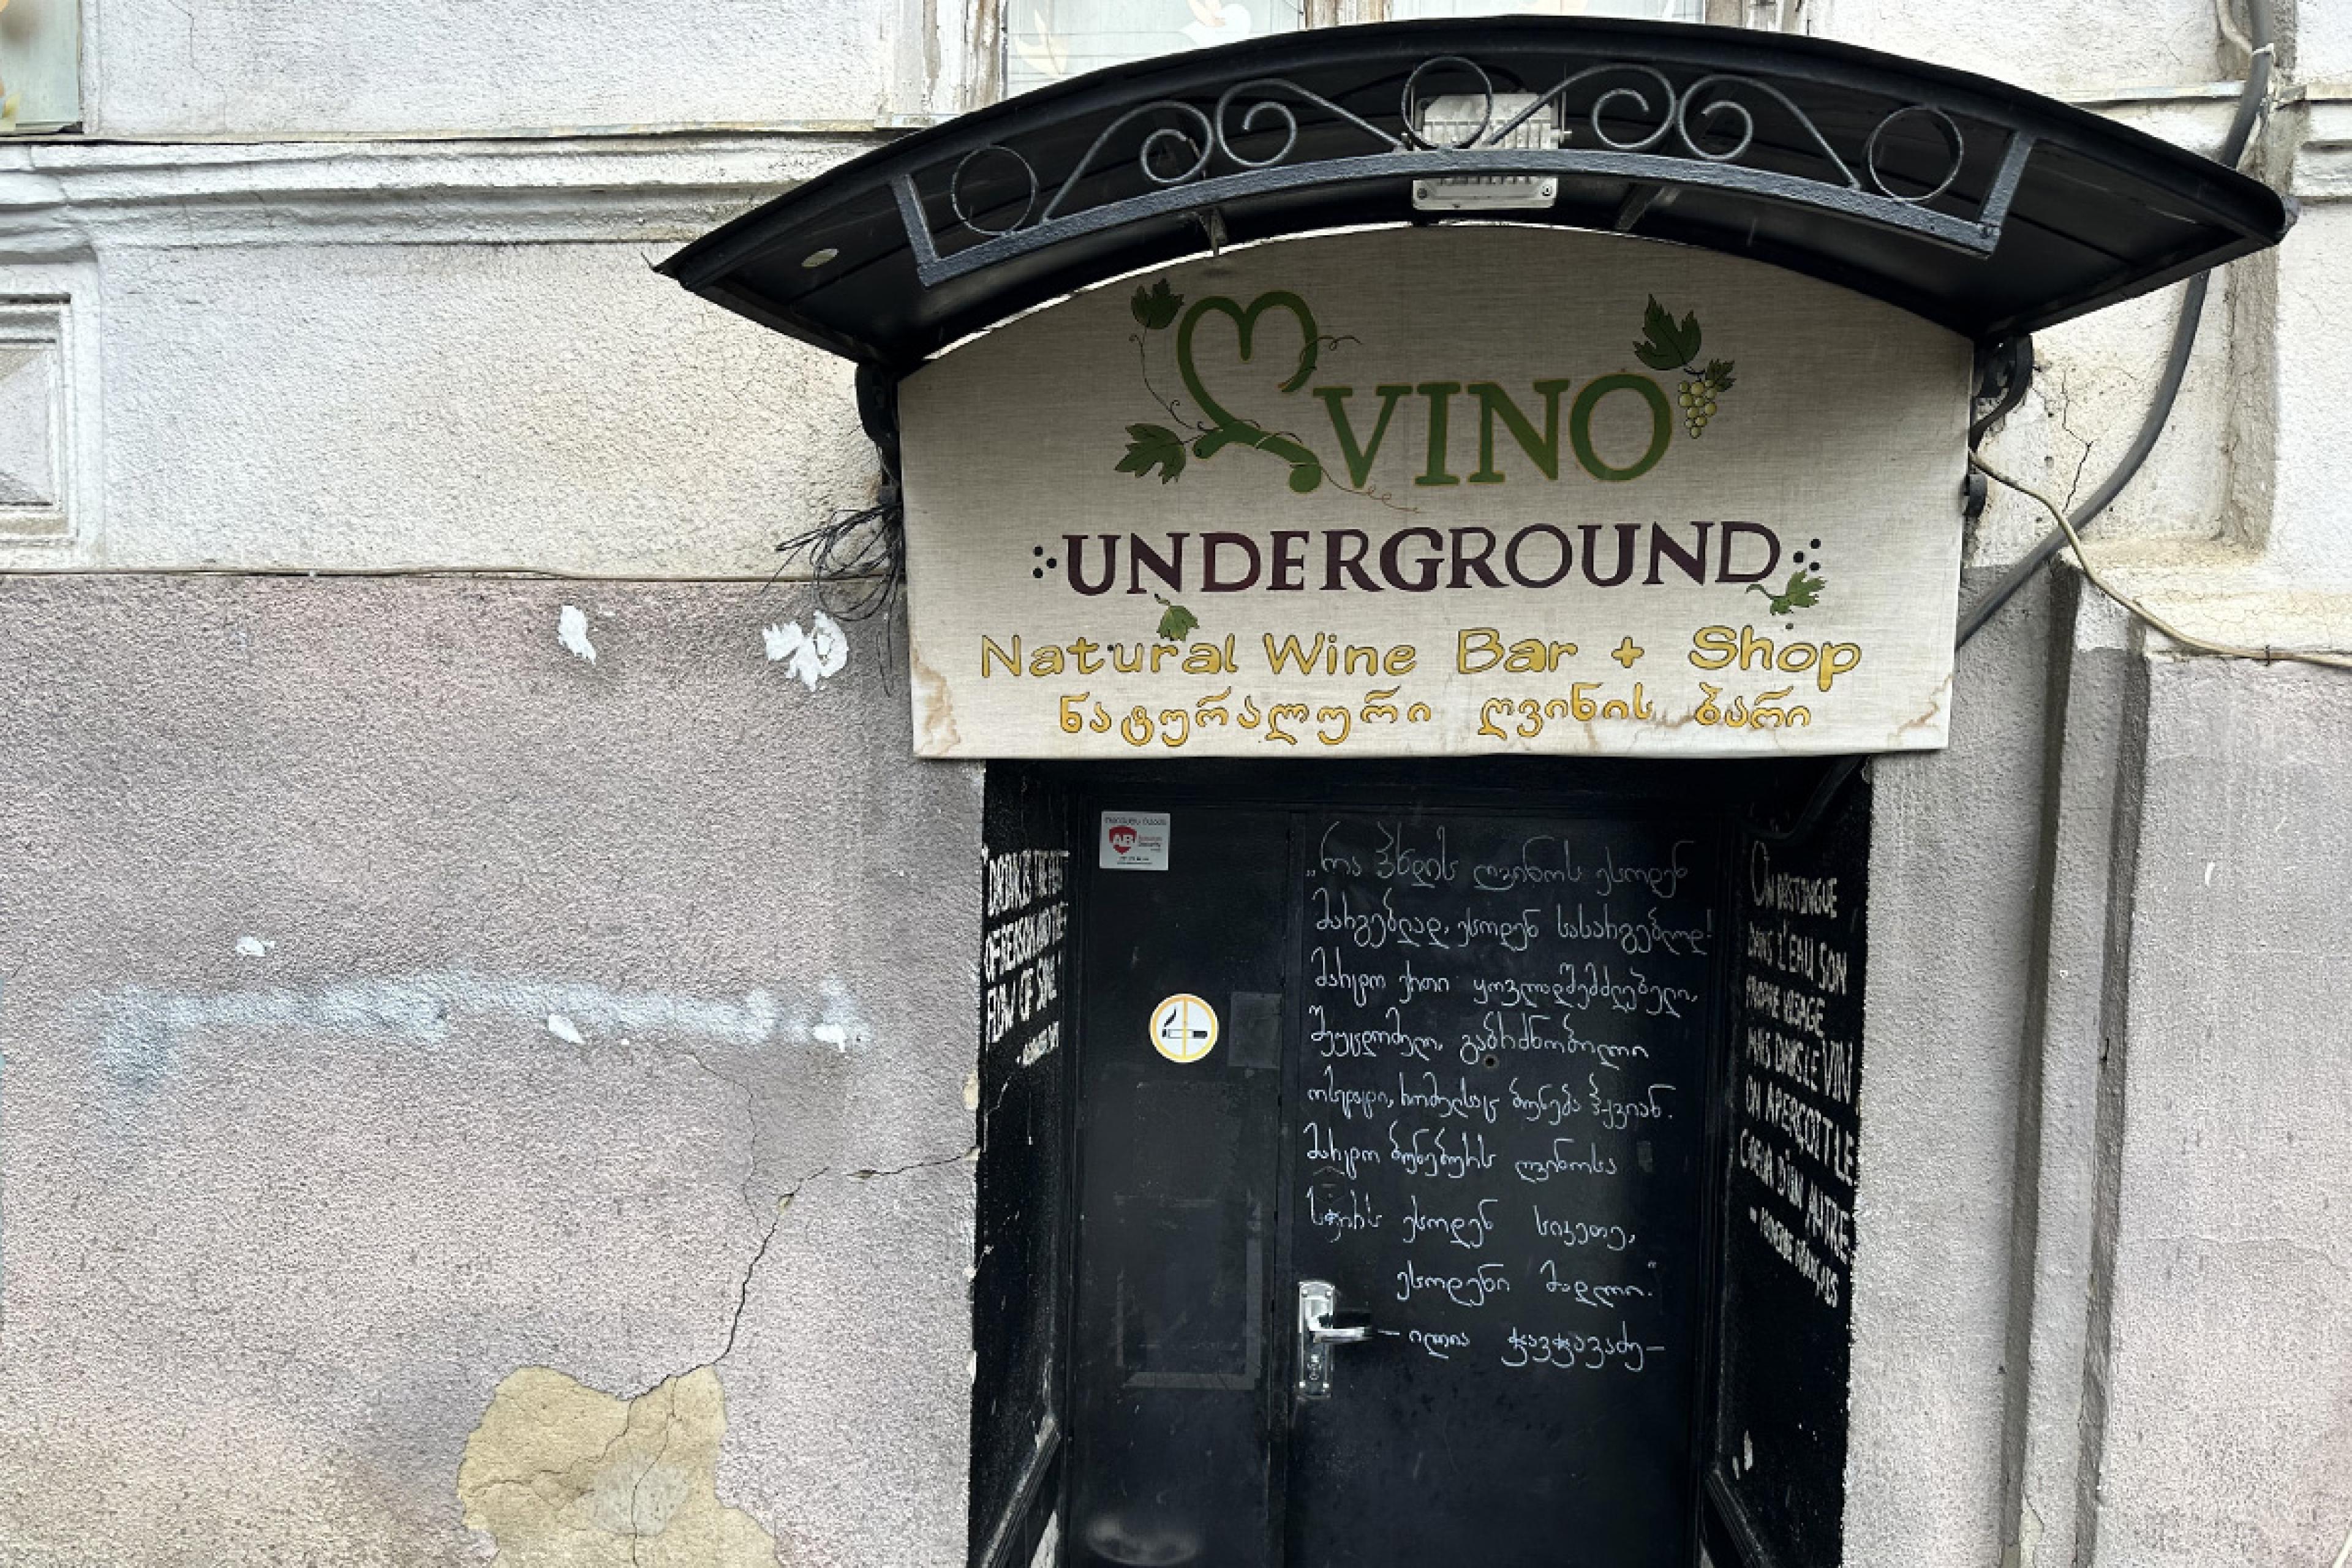 Wine bar entrance in a concrete building